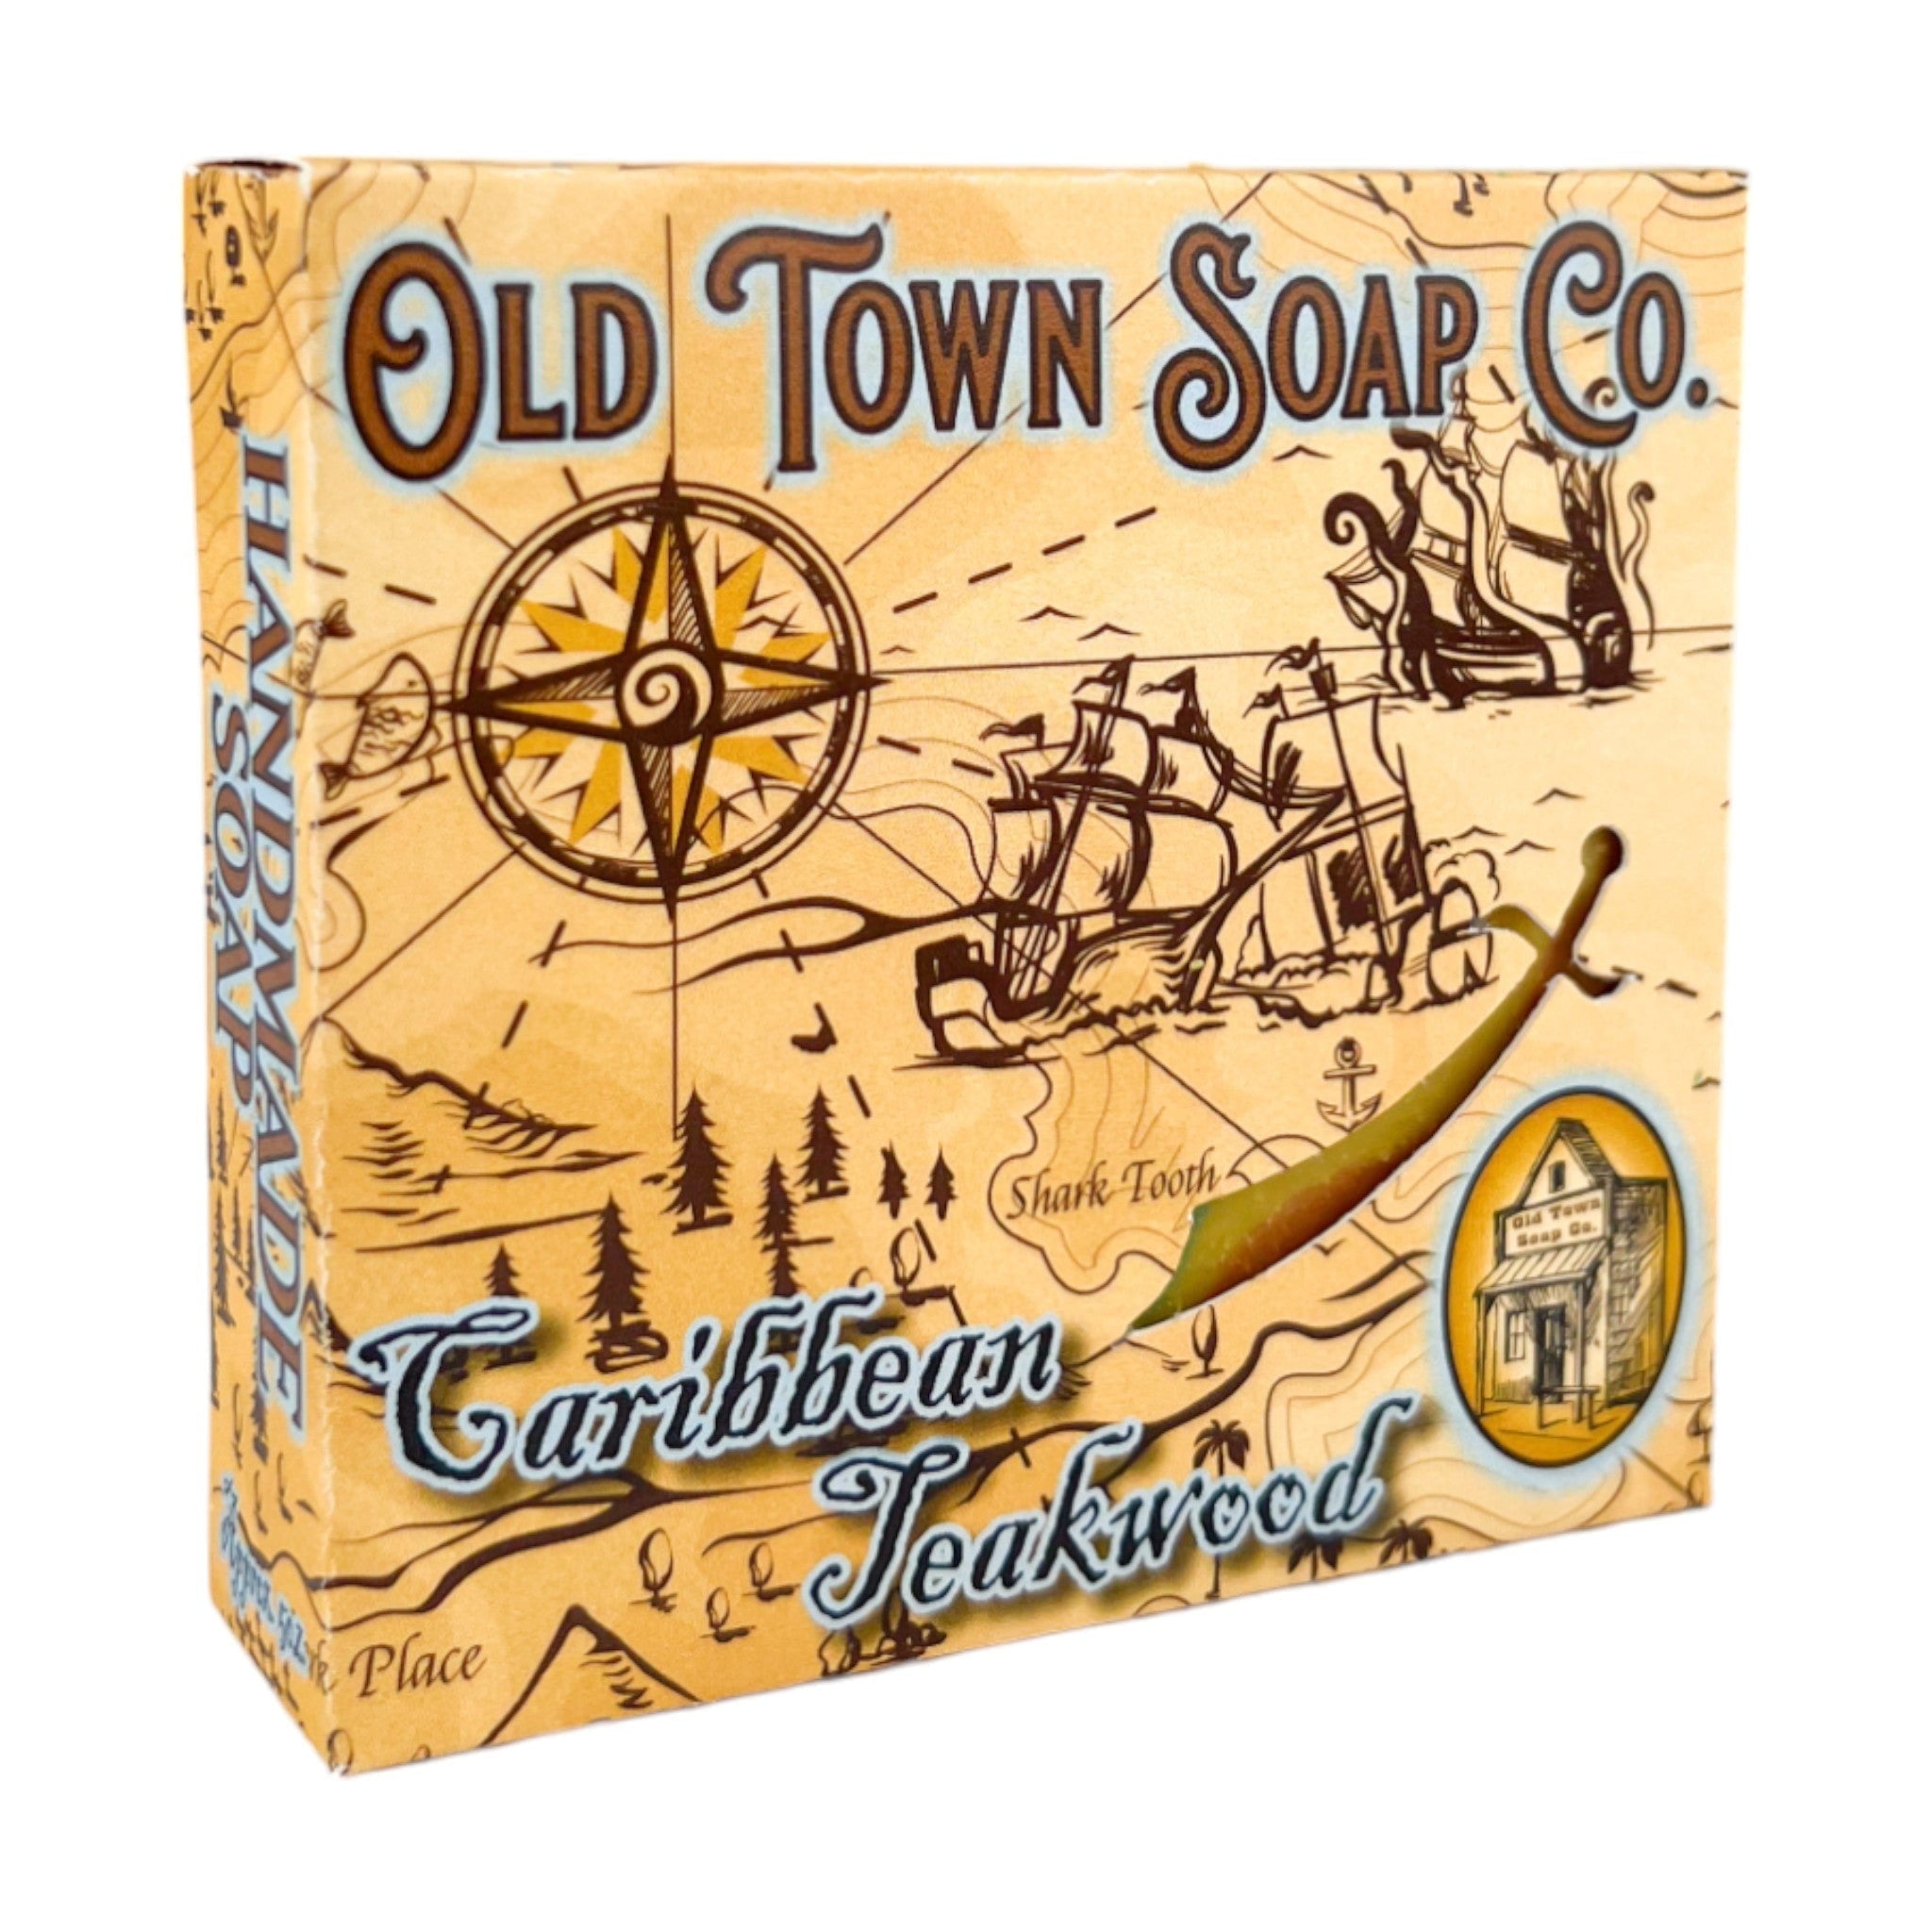 Caribbean Teakwood -Bar Soap - Old Town Soap Co.